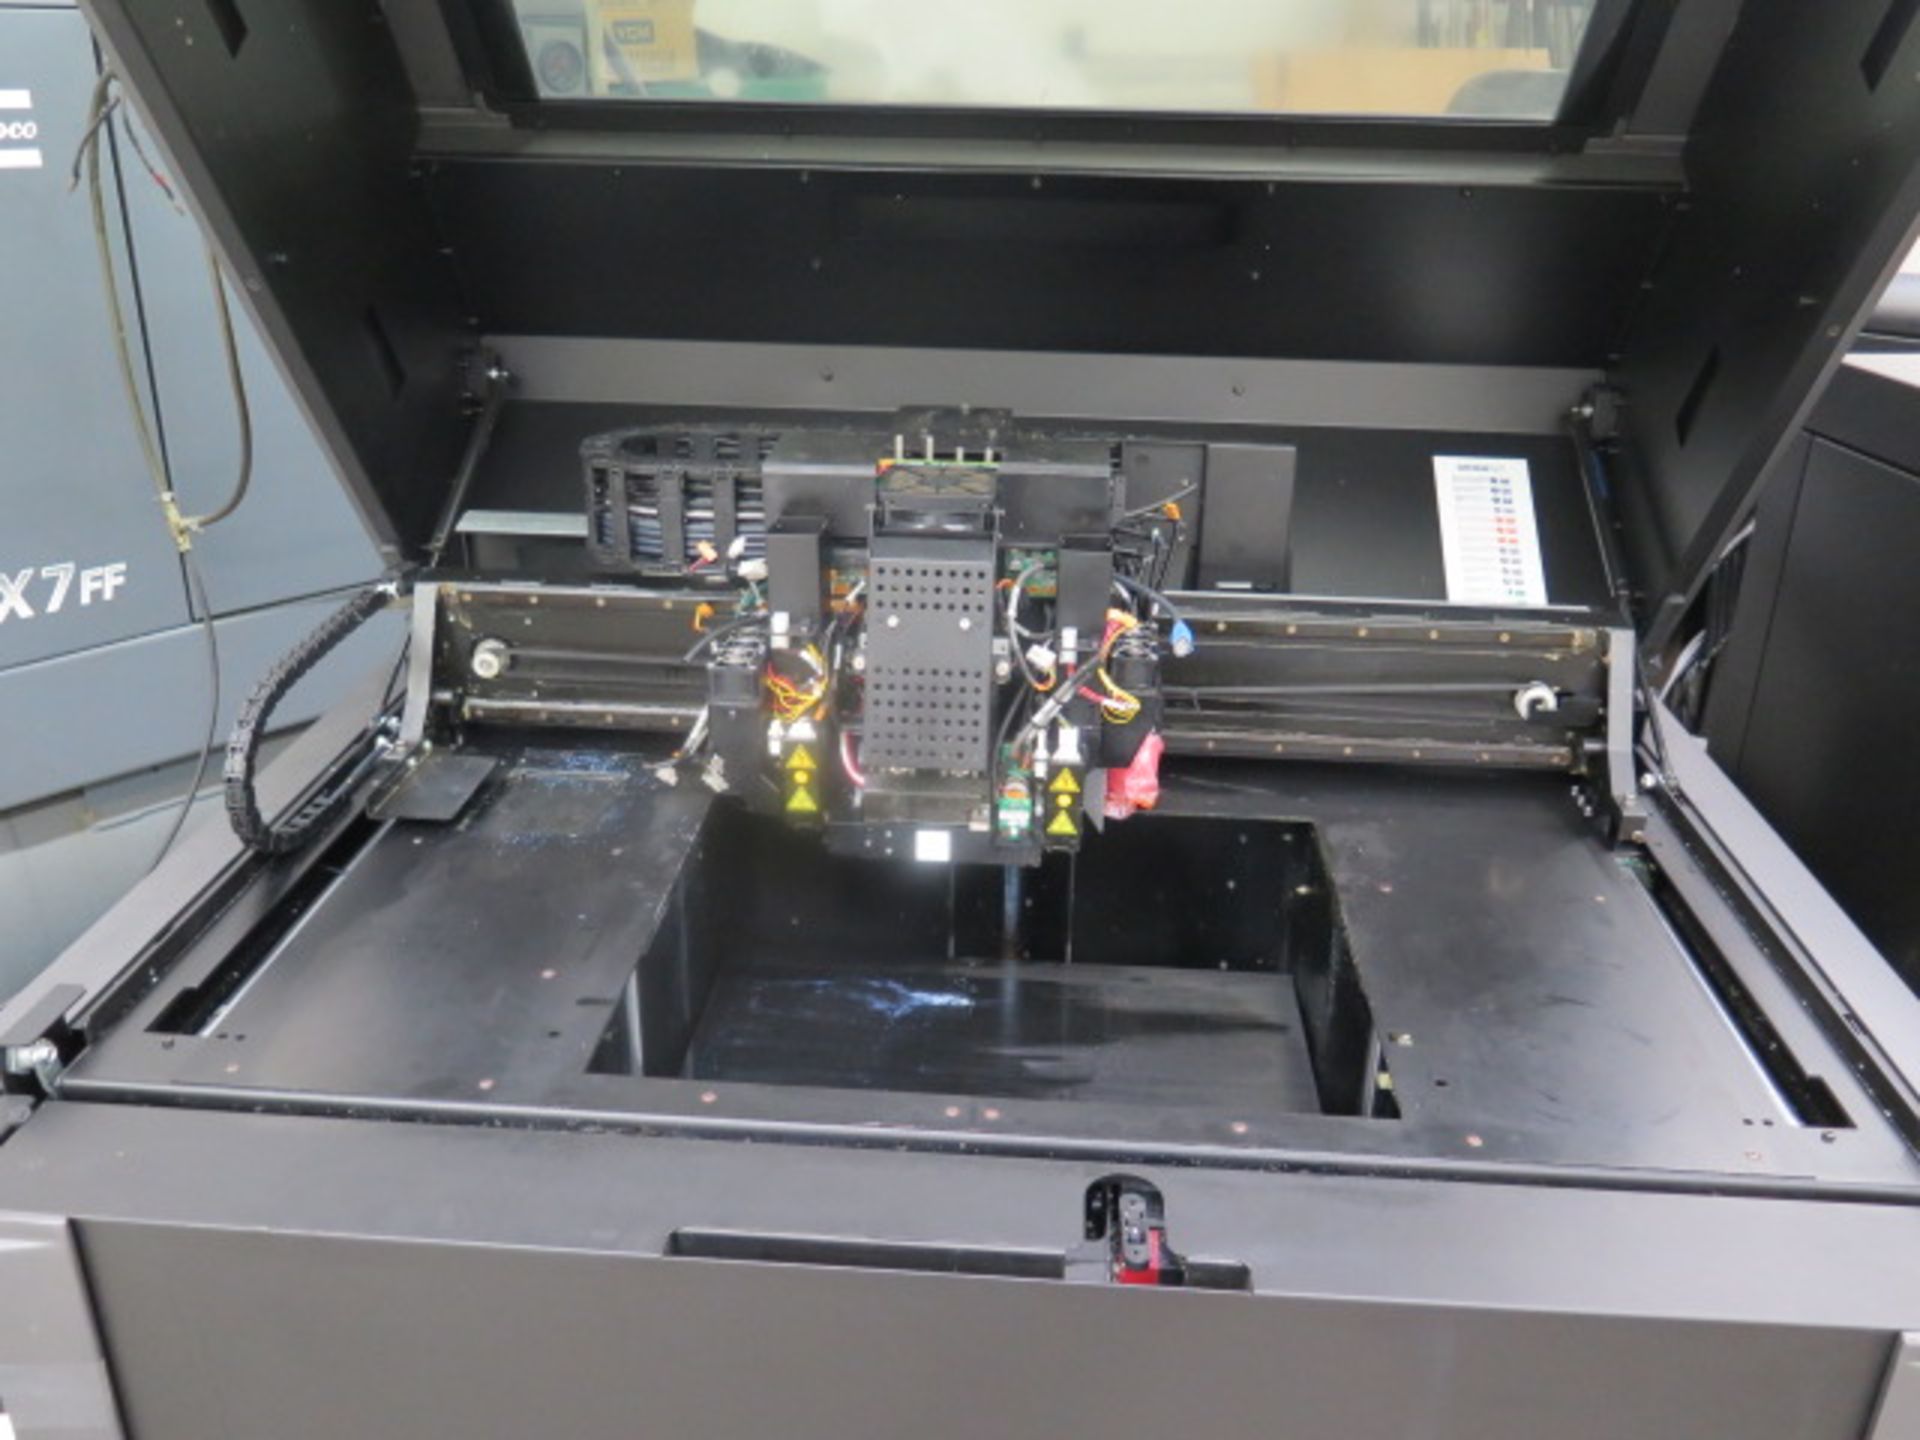 2018 Stratasys J850 Full Color Multi Material Industrial 3D Printer s/n 8500280, SOLD AS IS - Image 9 of 28